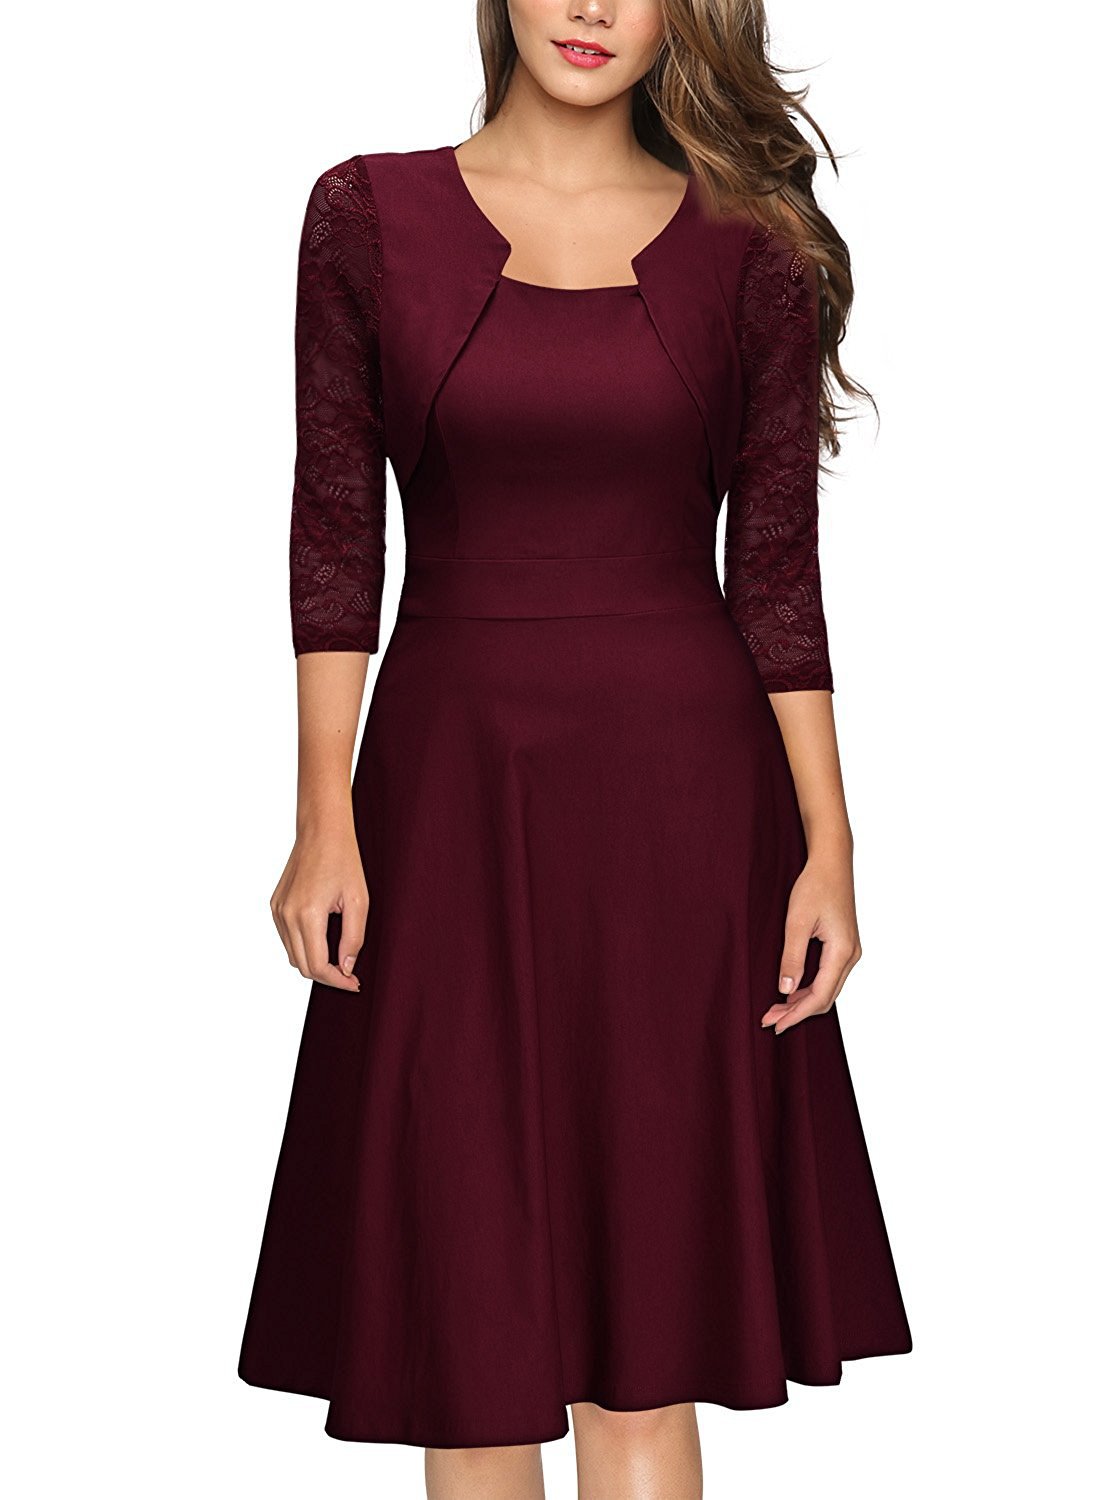 High Quality Three Quarter Sleeve Splice Lace Dress - Wine Red